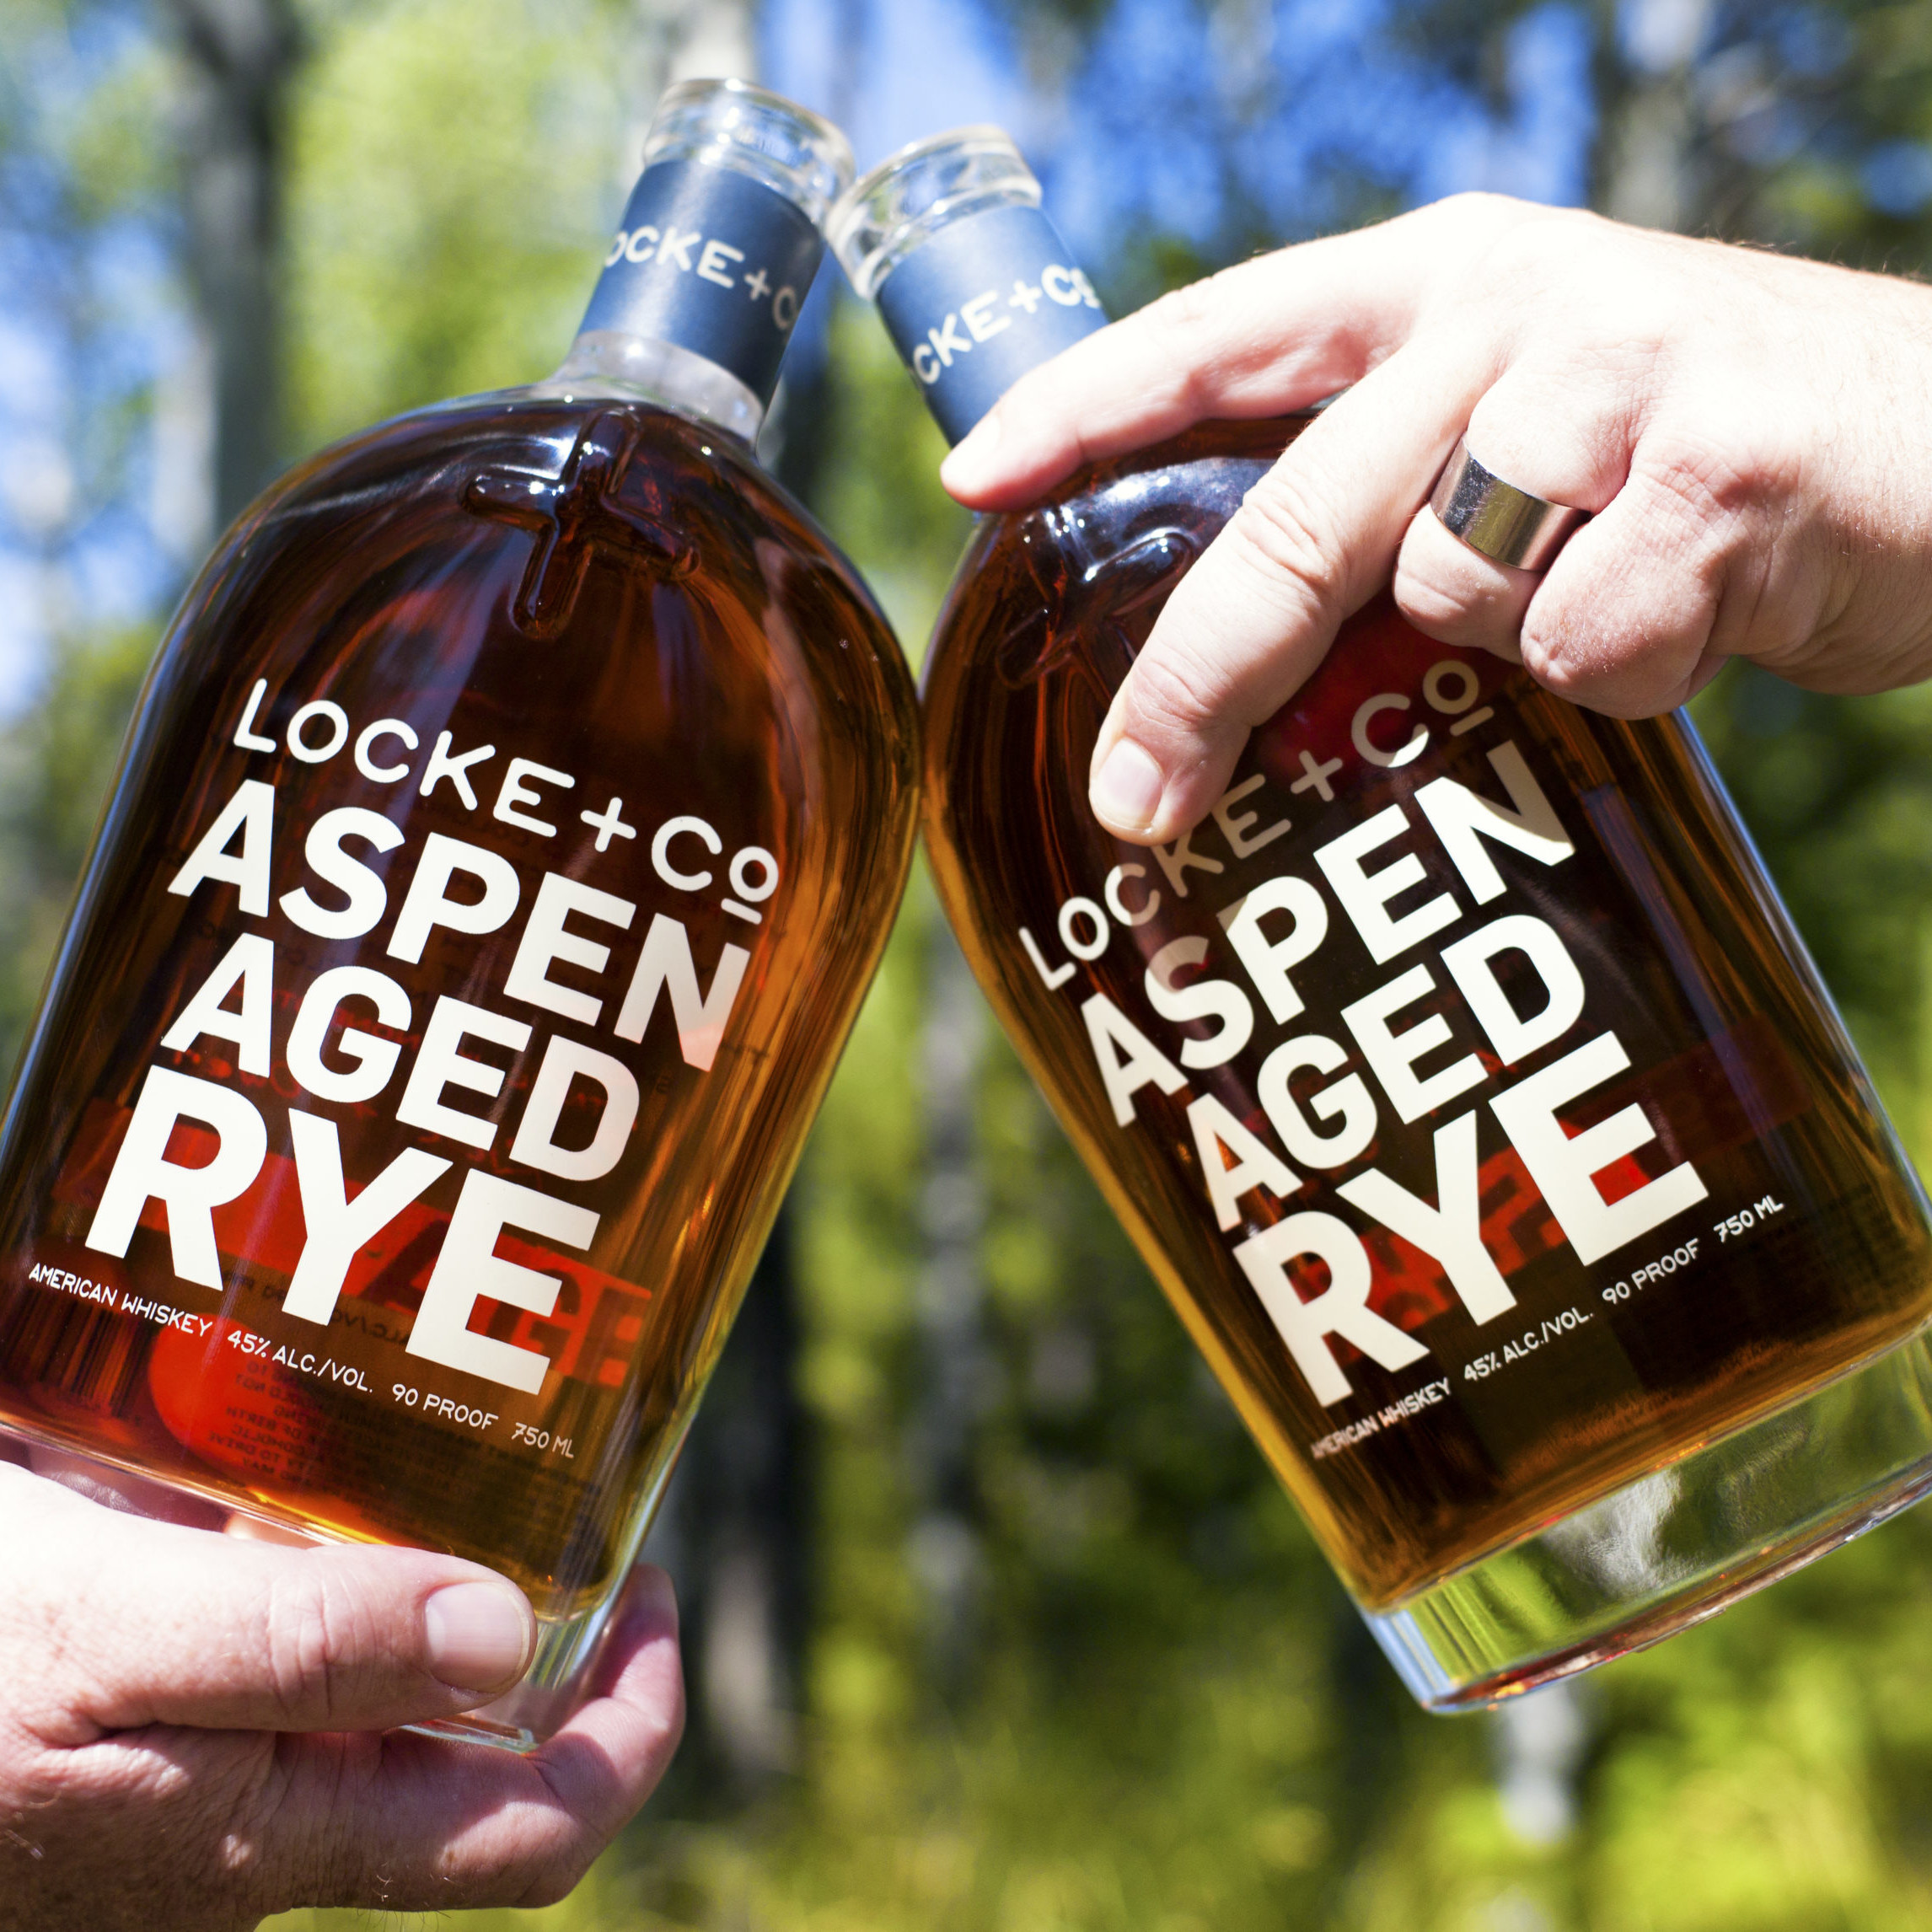 Two people cheer-sings Locke + Co Distilling Aspen Aged Rye Whiskey Bottles